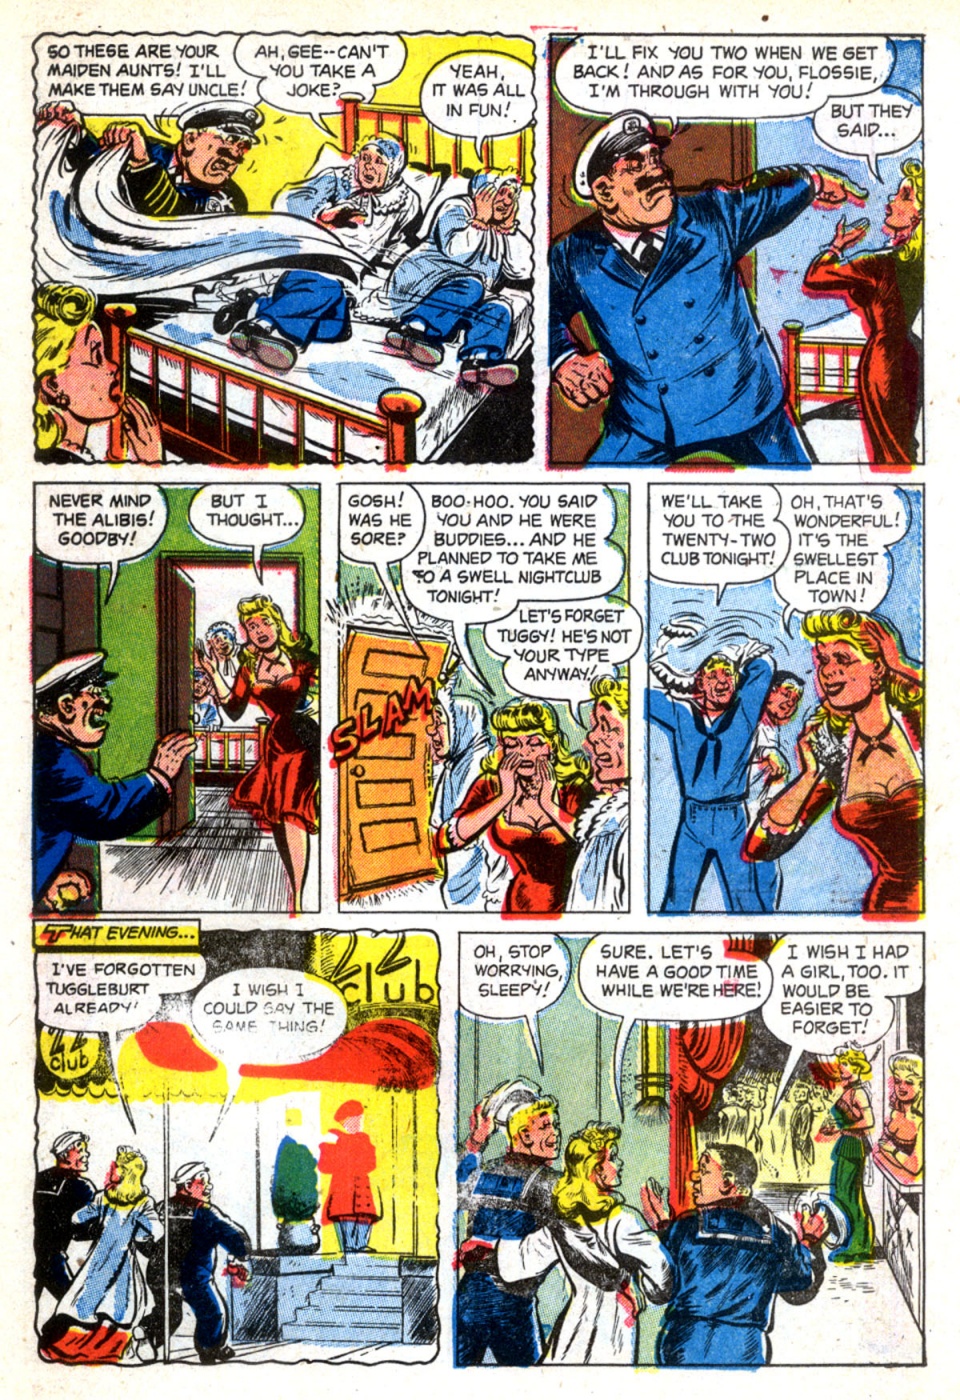 Anchors the Salt Water Daffy - Comics (b) (17)